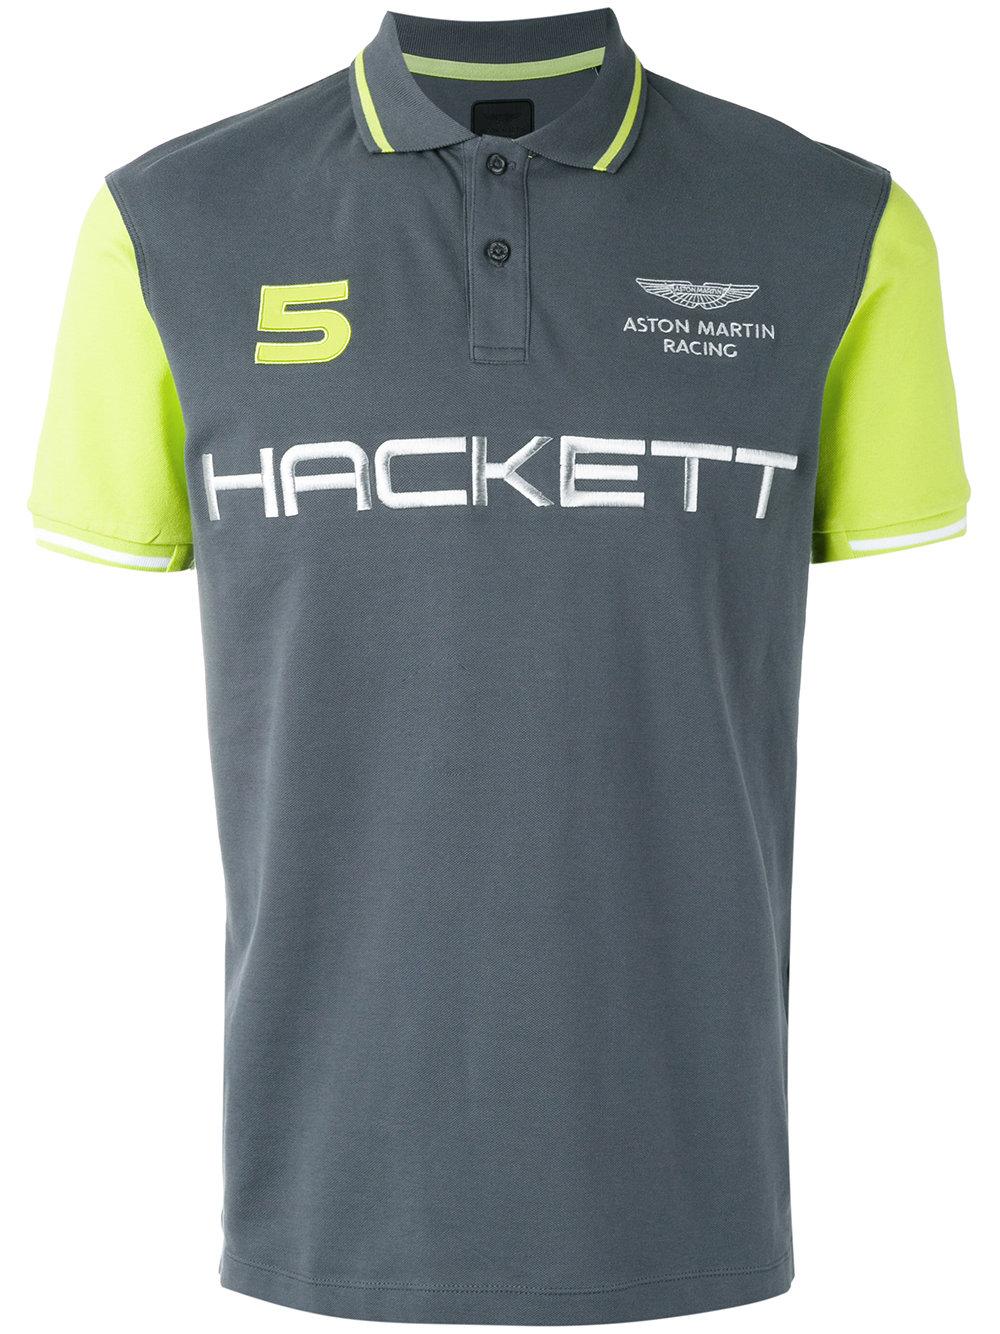 Lyst - Hackett Brand Print Polo Shirt in Gray for Men